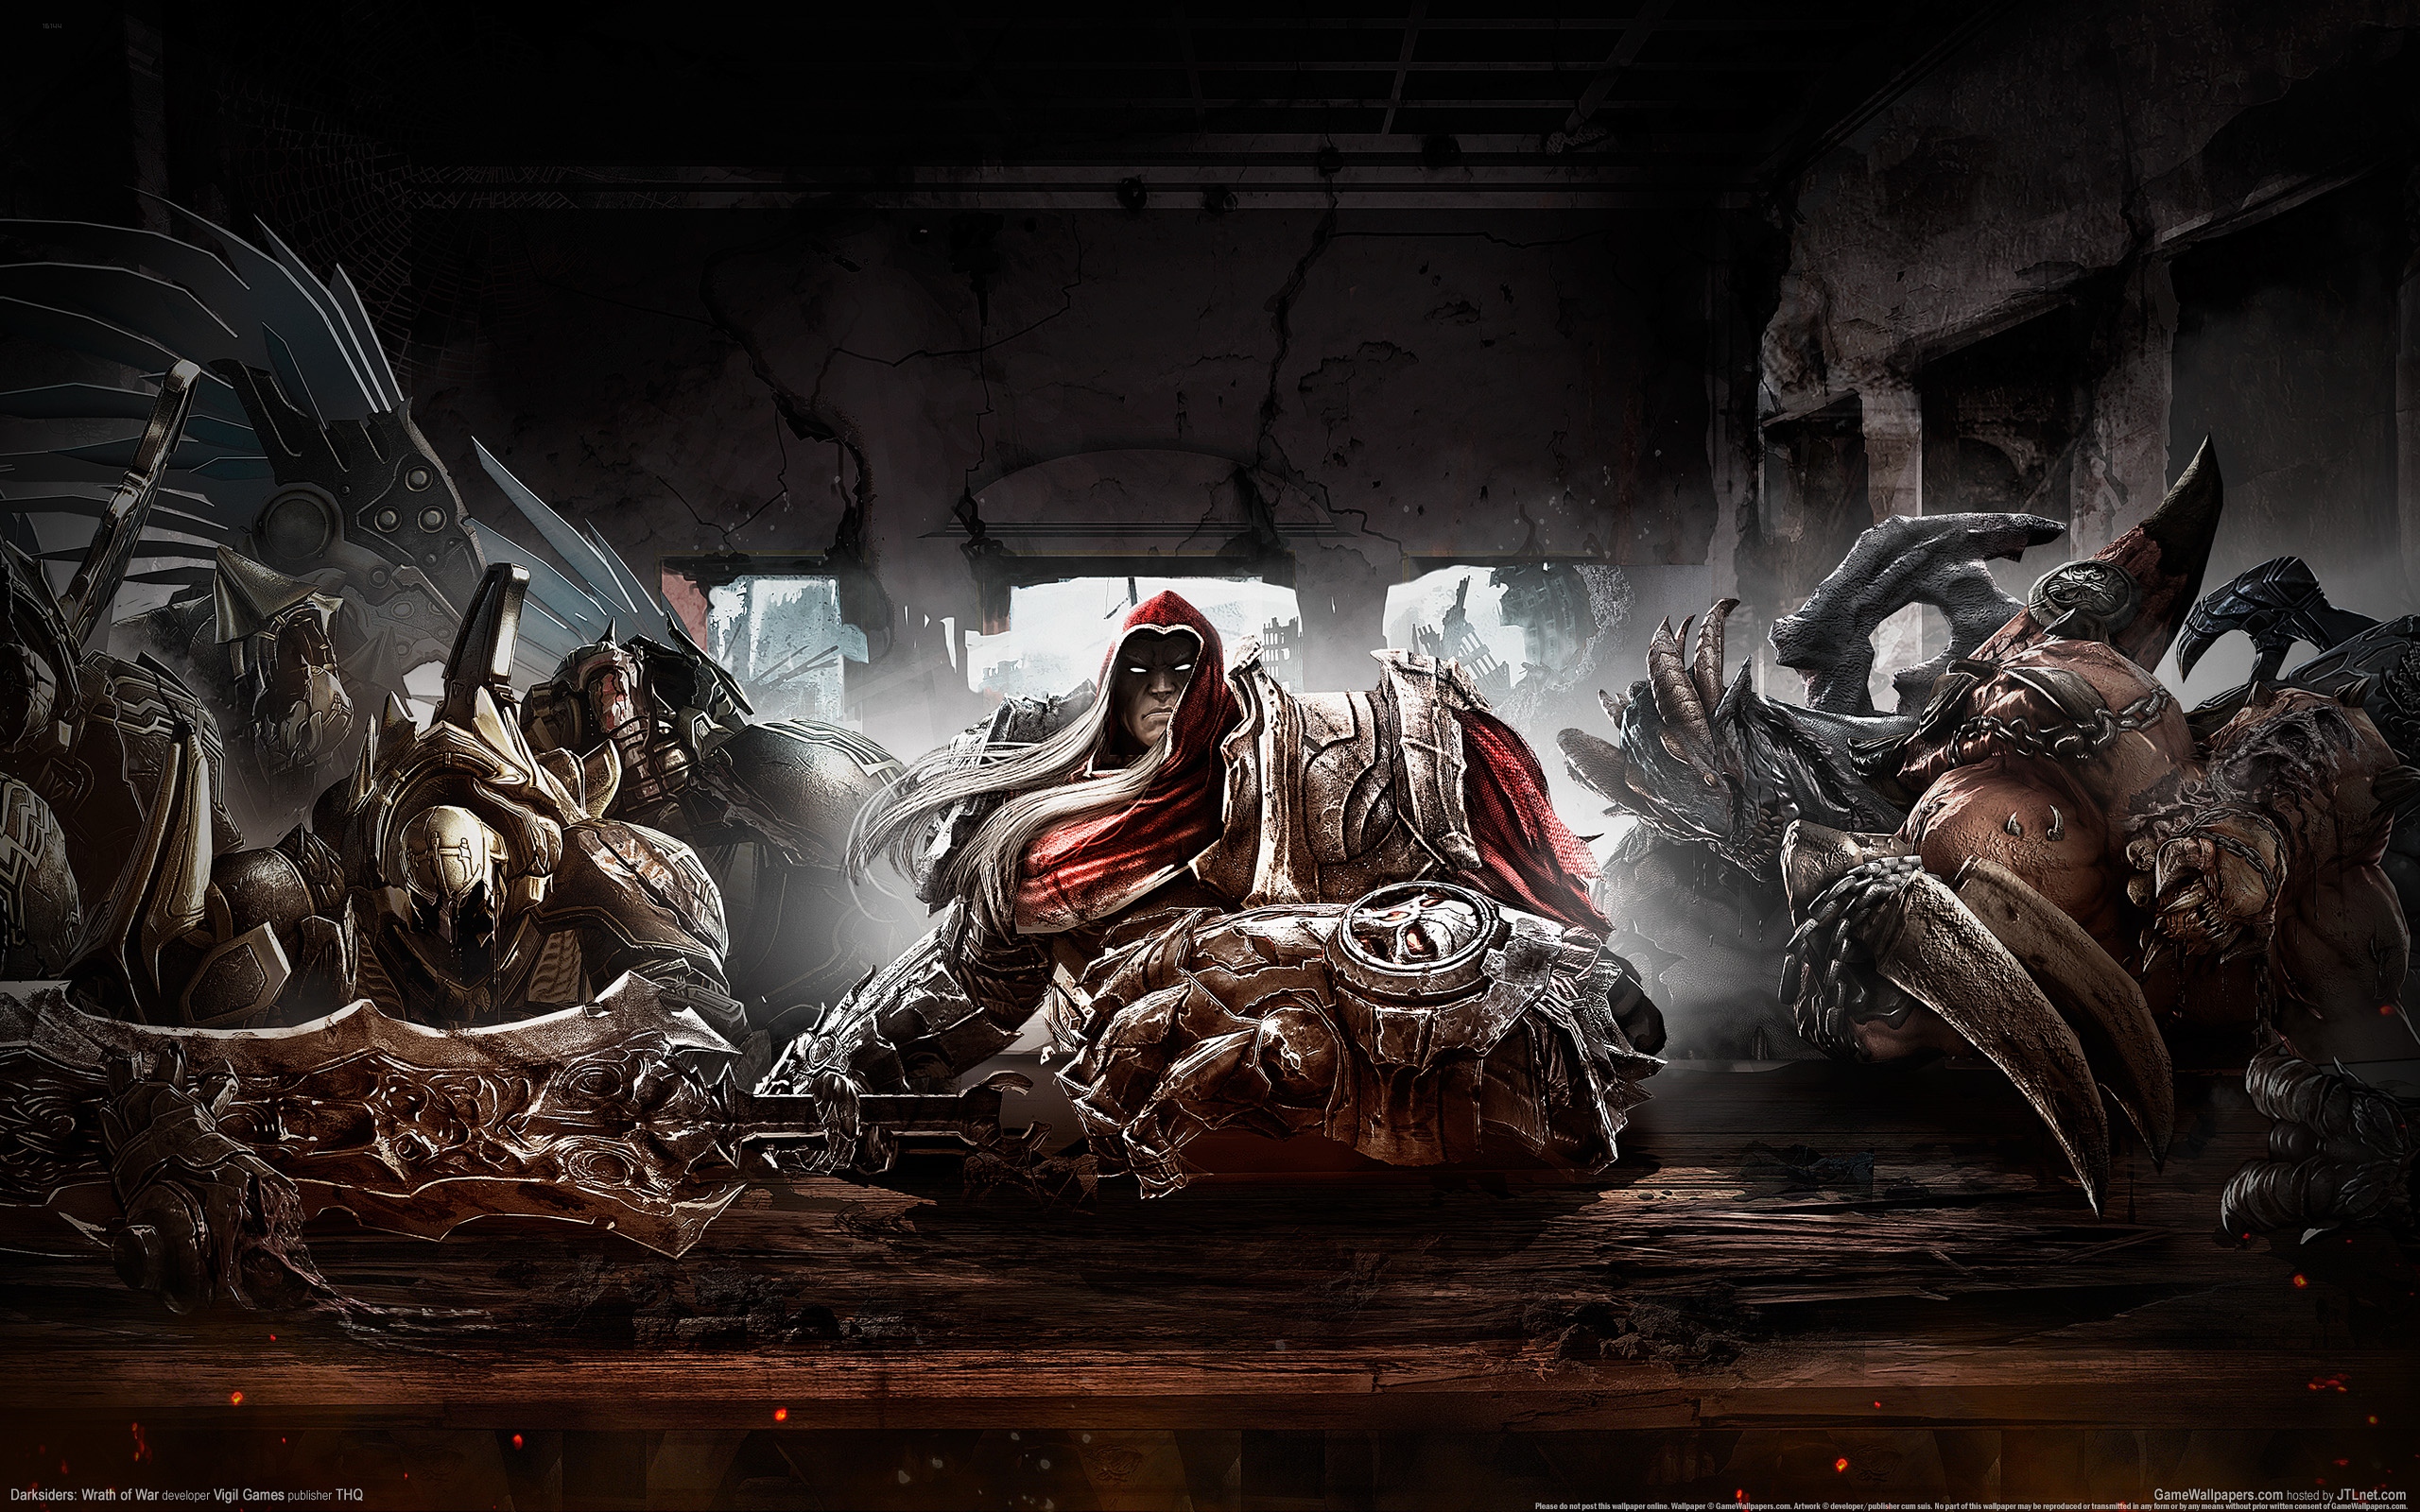 Darksiders video game character War in epic action pose on desktop wallpaper.